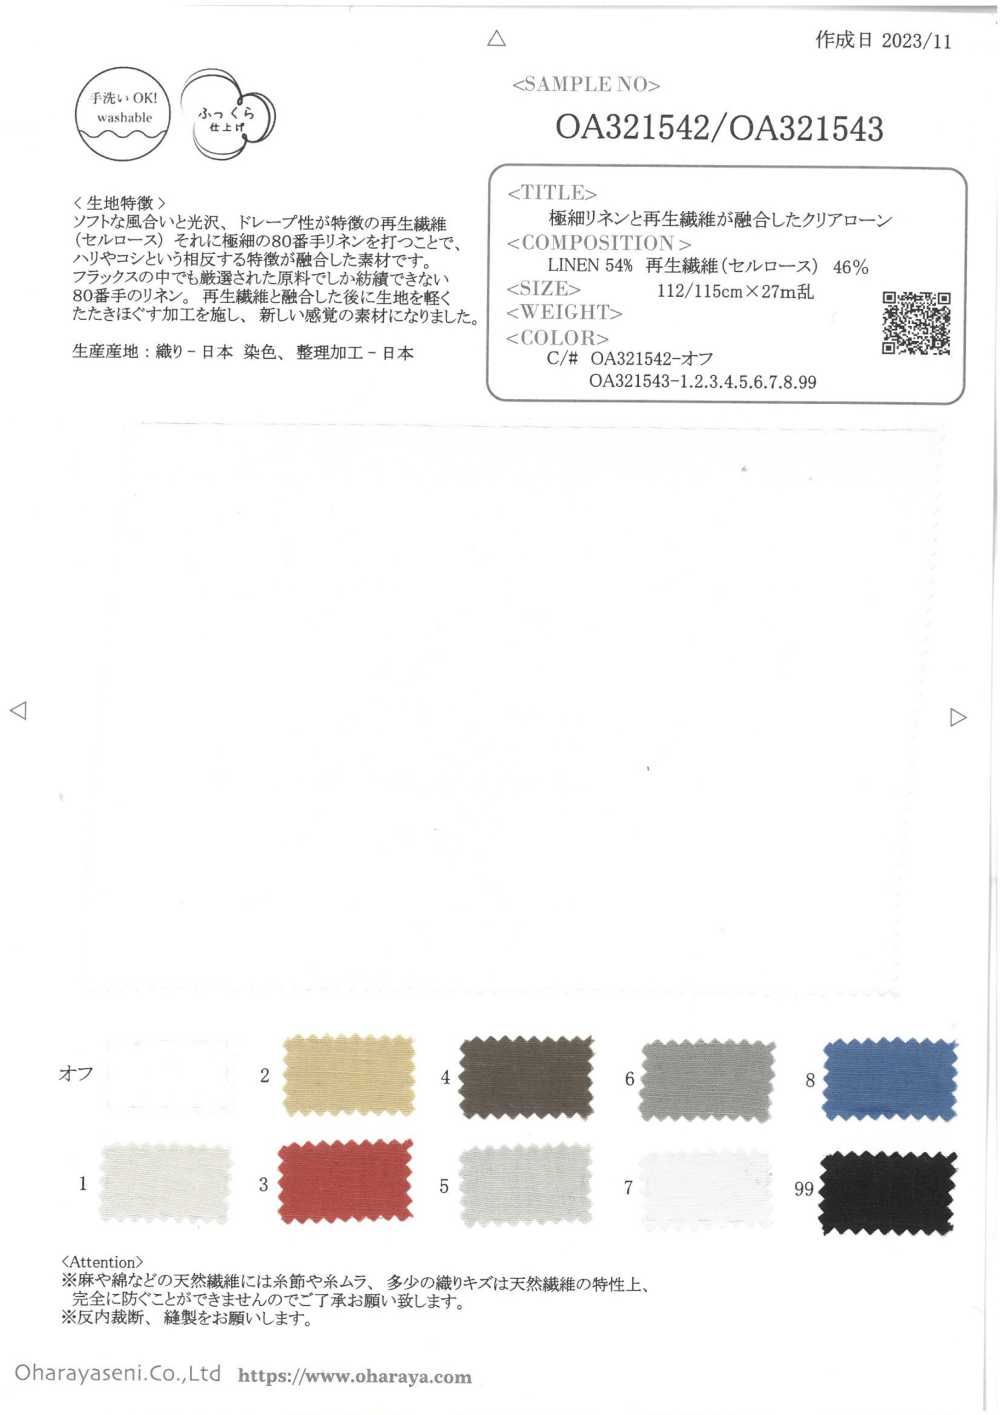 OA321543 Césped Transparente Que Combina Lino Ultrafino Y Fibras Recicladas[Fabrica Textil] Oharayaseni